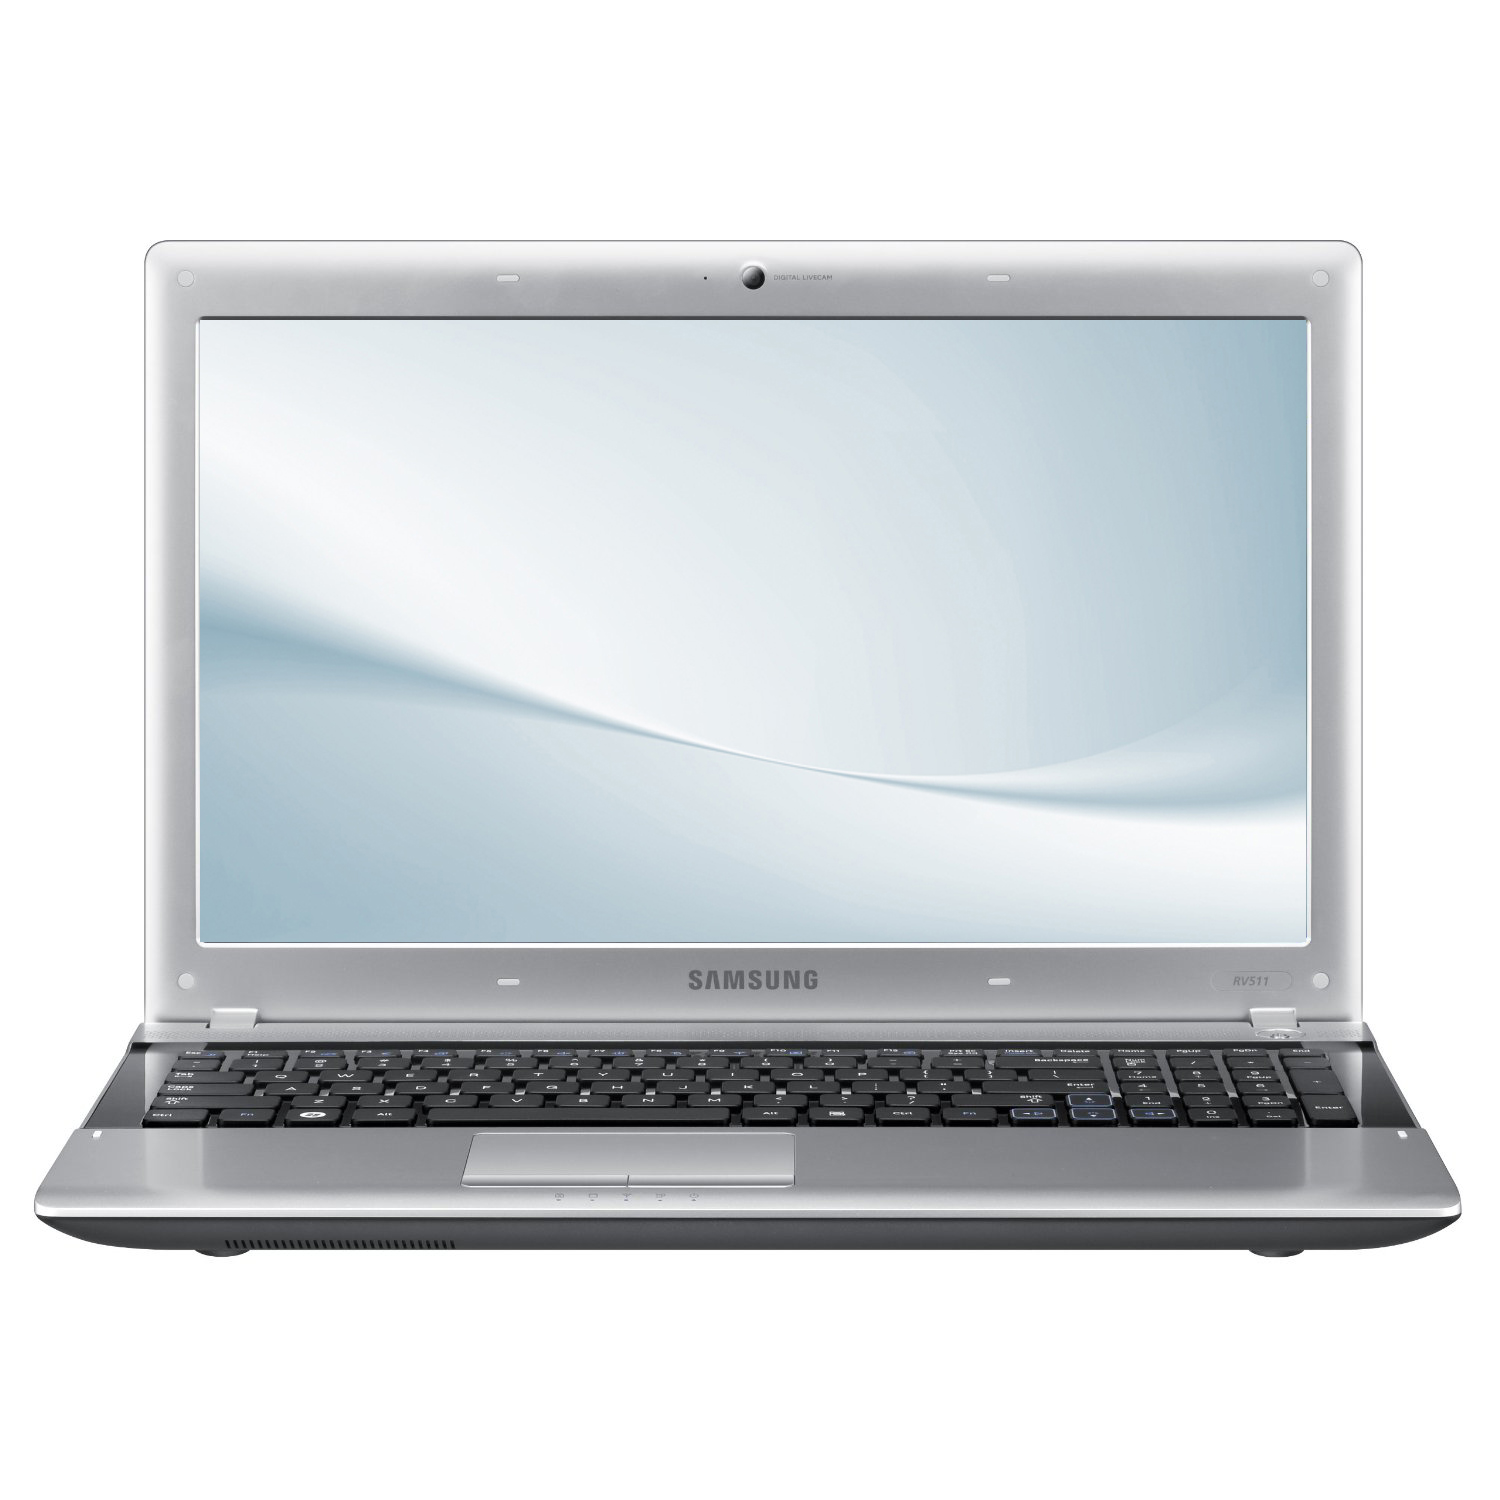 Samsung NPRV511S03UK Laptops